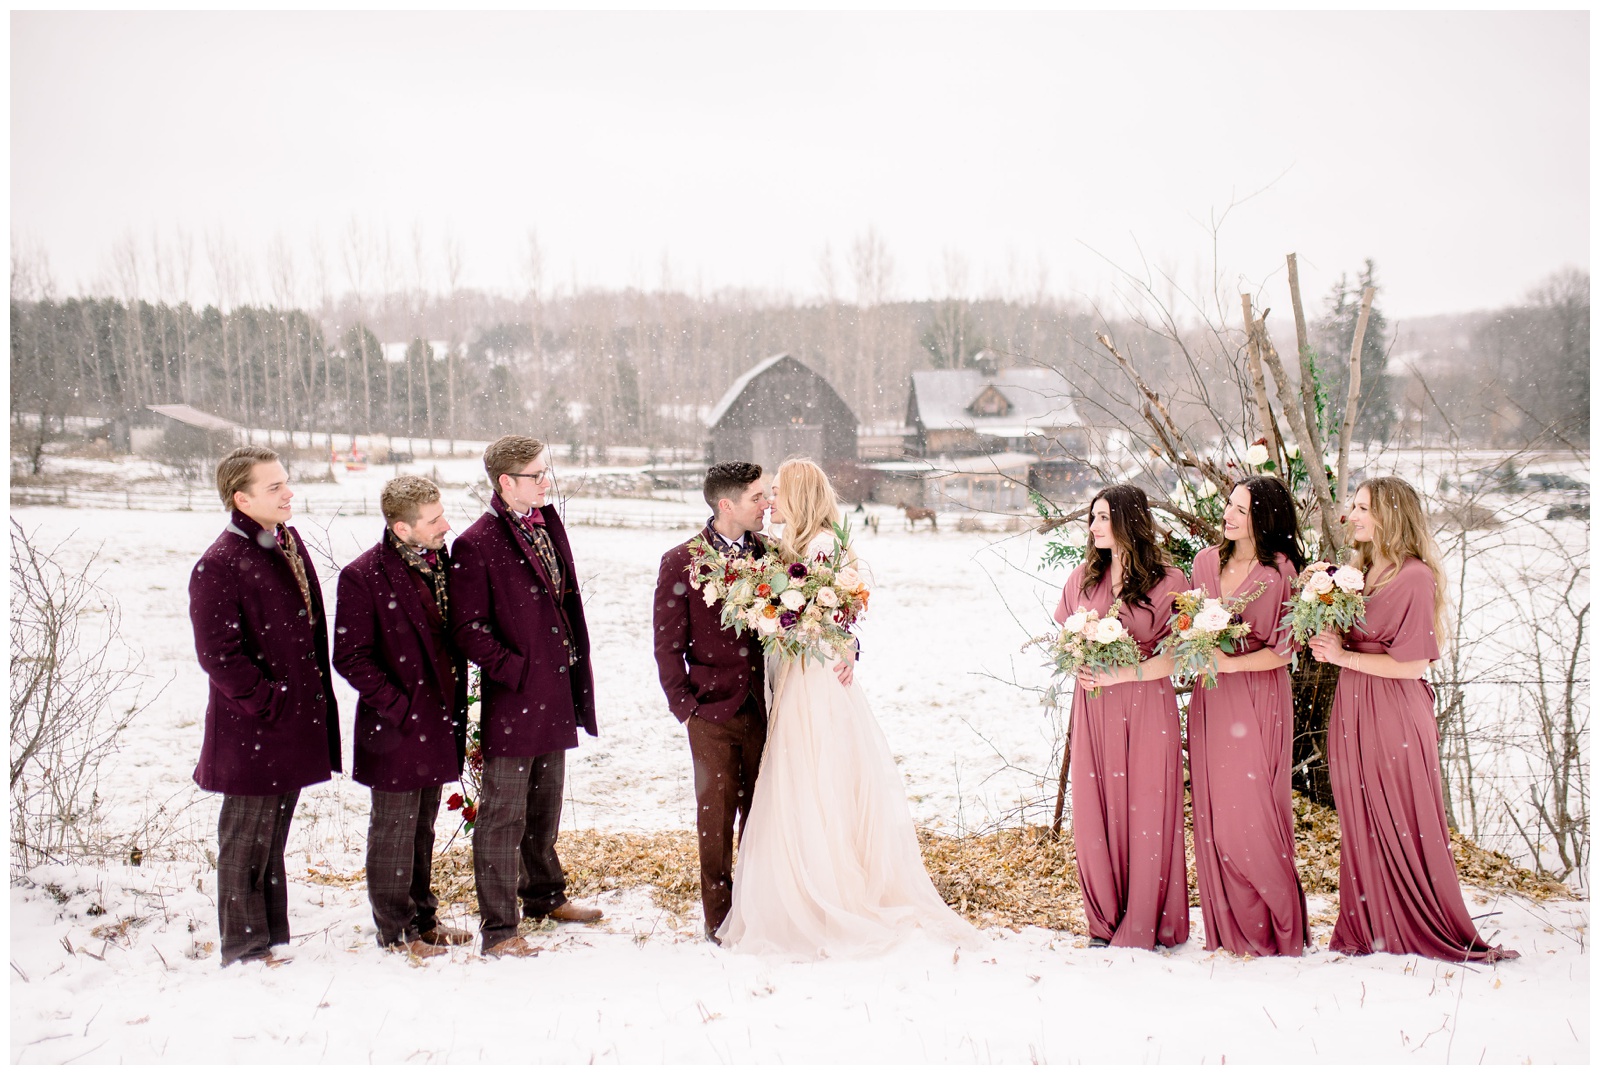 enchanted barn wedding hillsdale wisconsin photographer meghan lee harris winter dusty rose bridesmaids